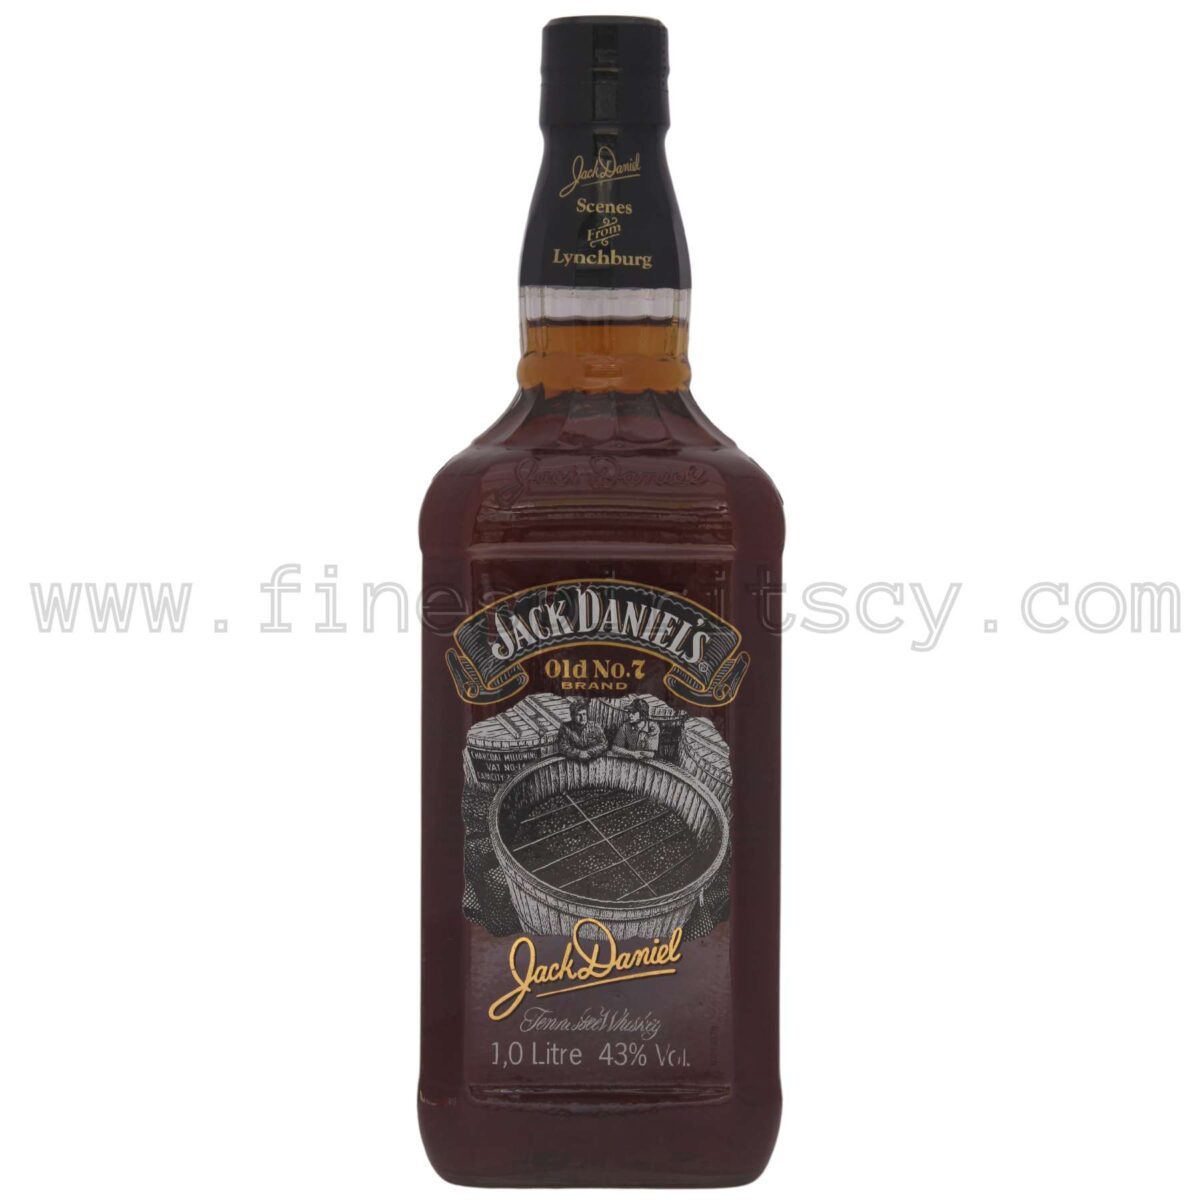 Jack Daniels Scenes From Lynchburg No. 9 Price FS Cyprus Whisky Whiskey CY